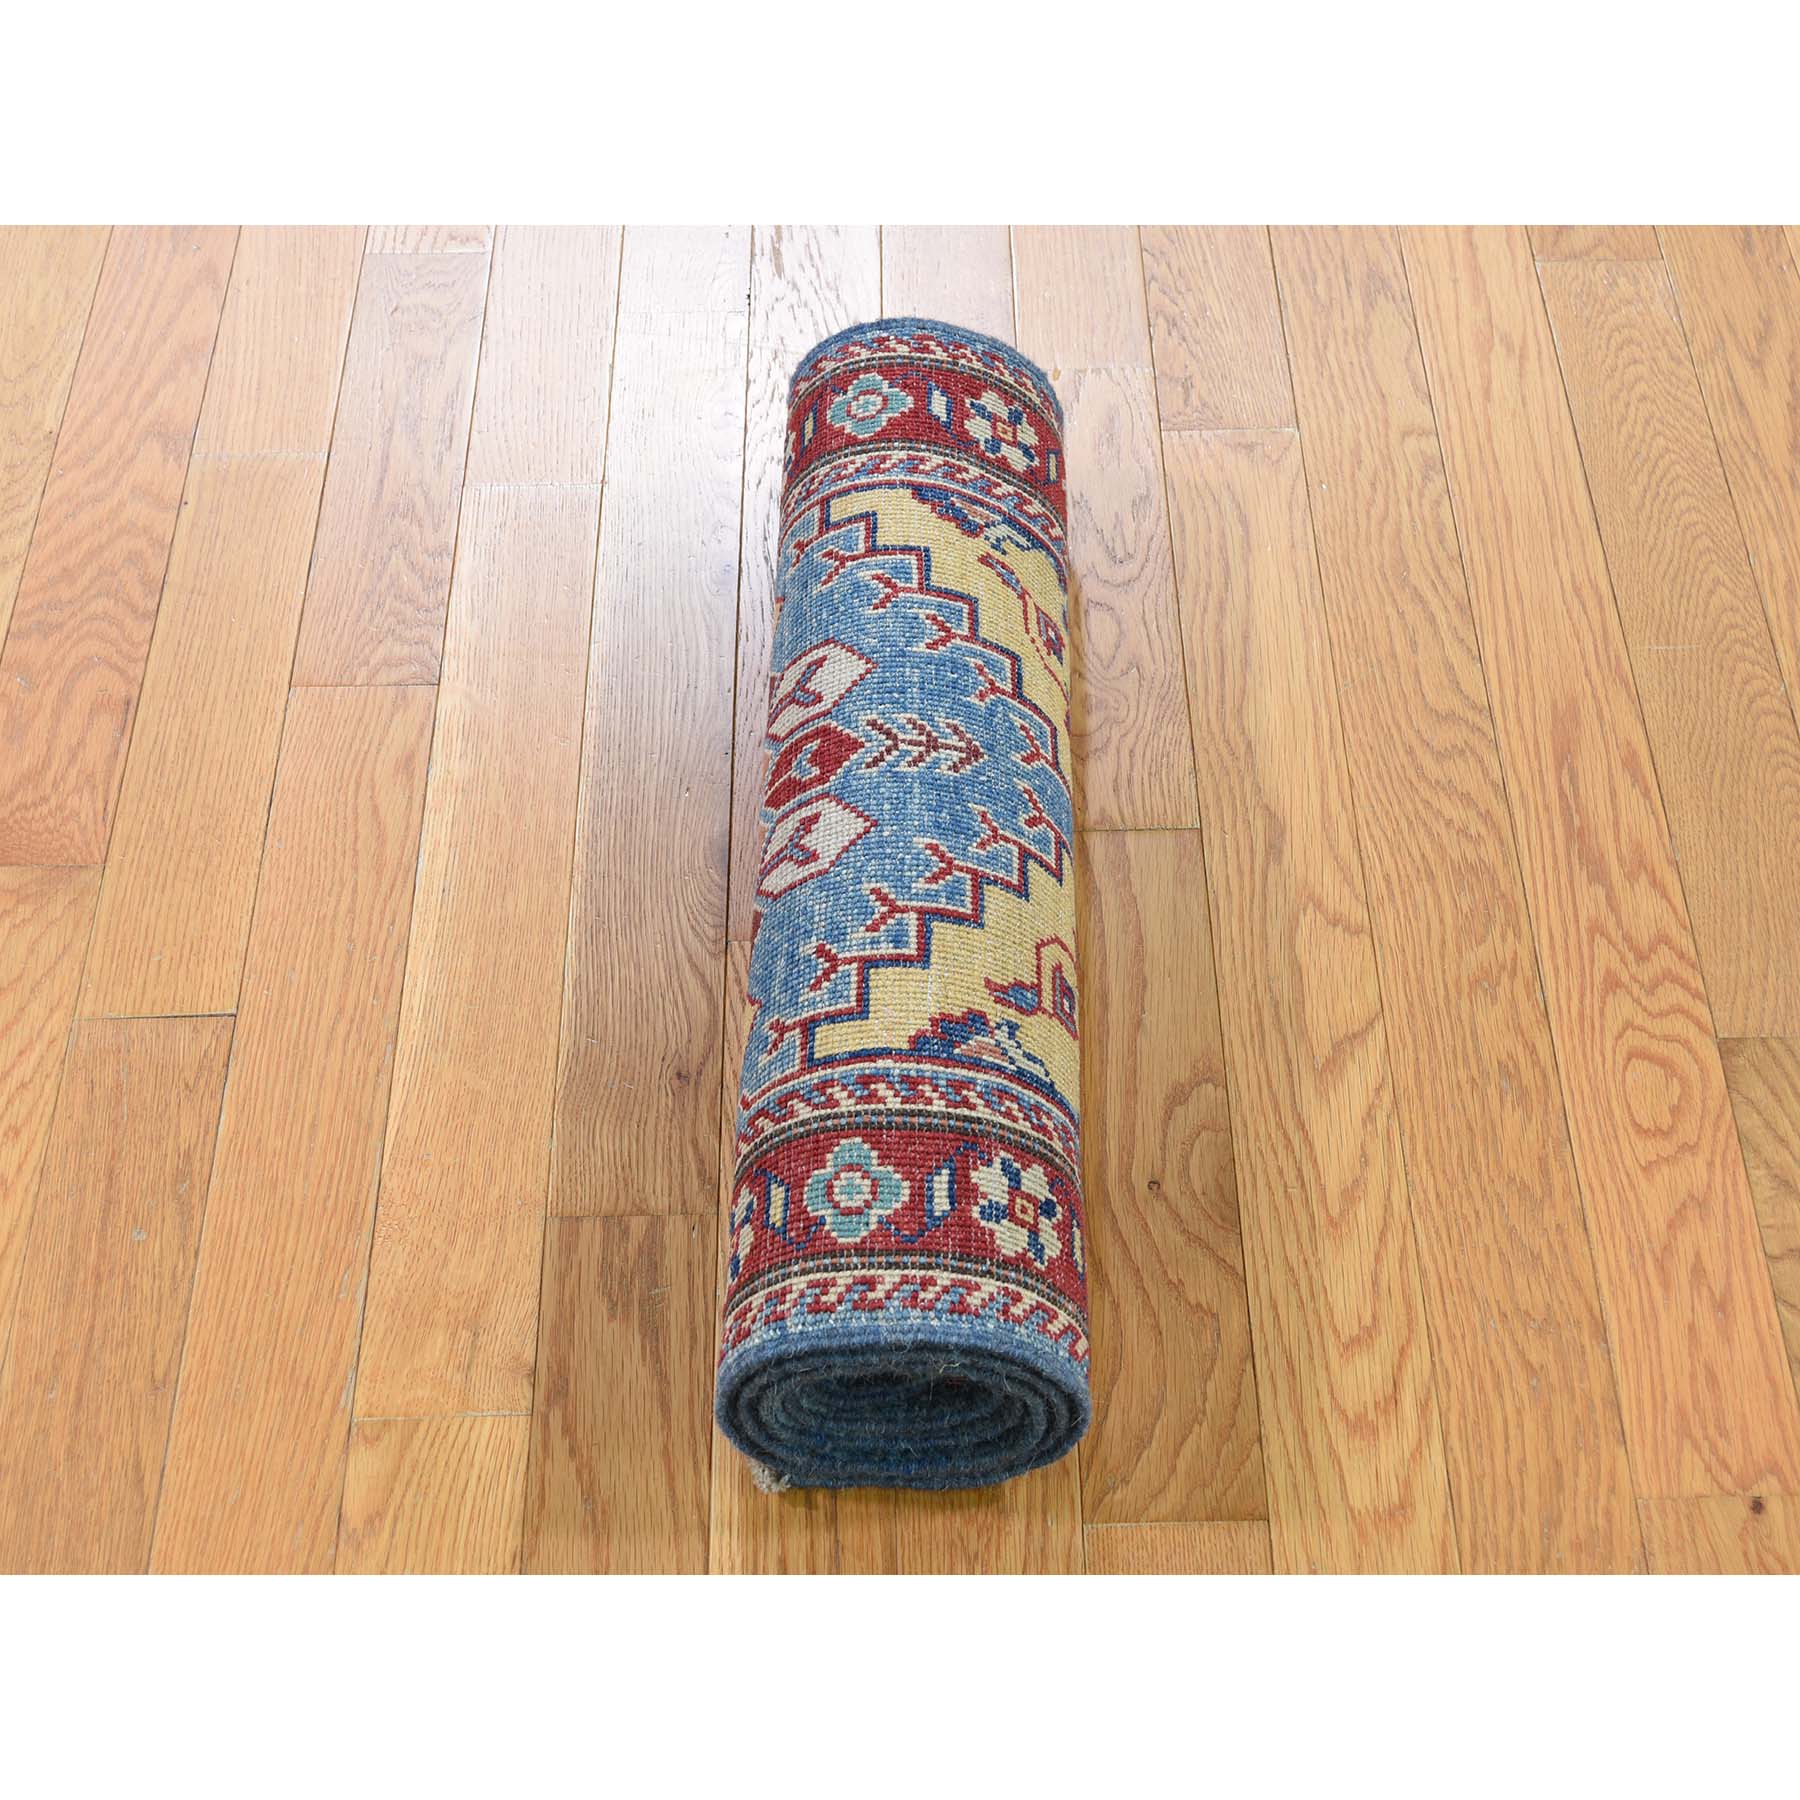 2-8 x5-8  Special Kazak Pure Wool Runner Hand-Knotted Geometric Design Oriental Rug 